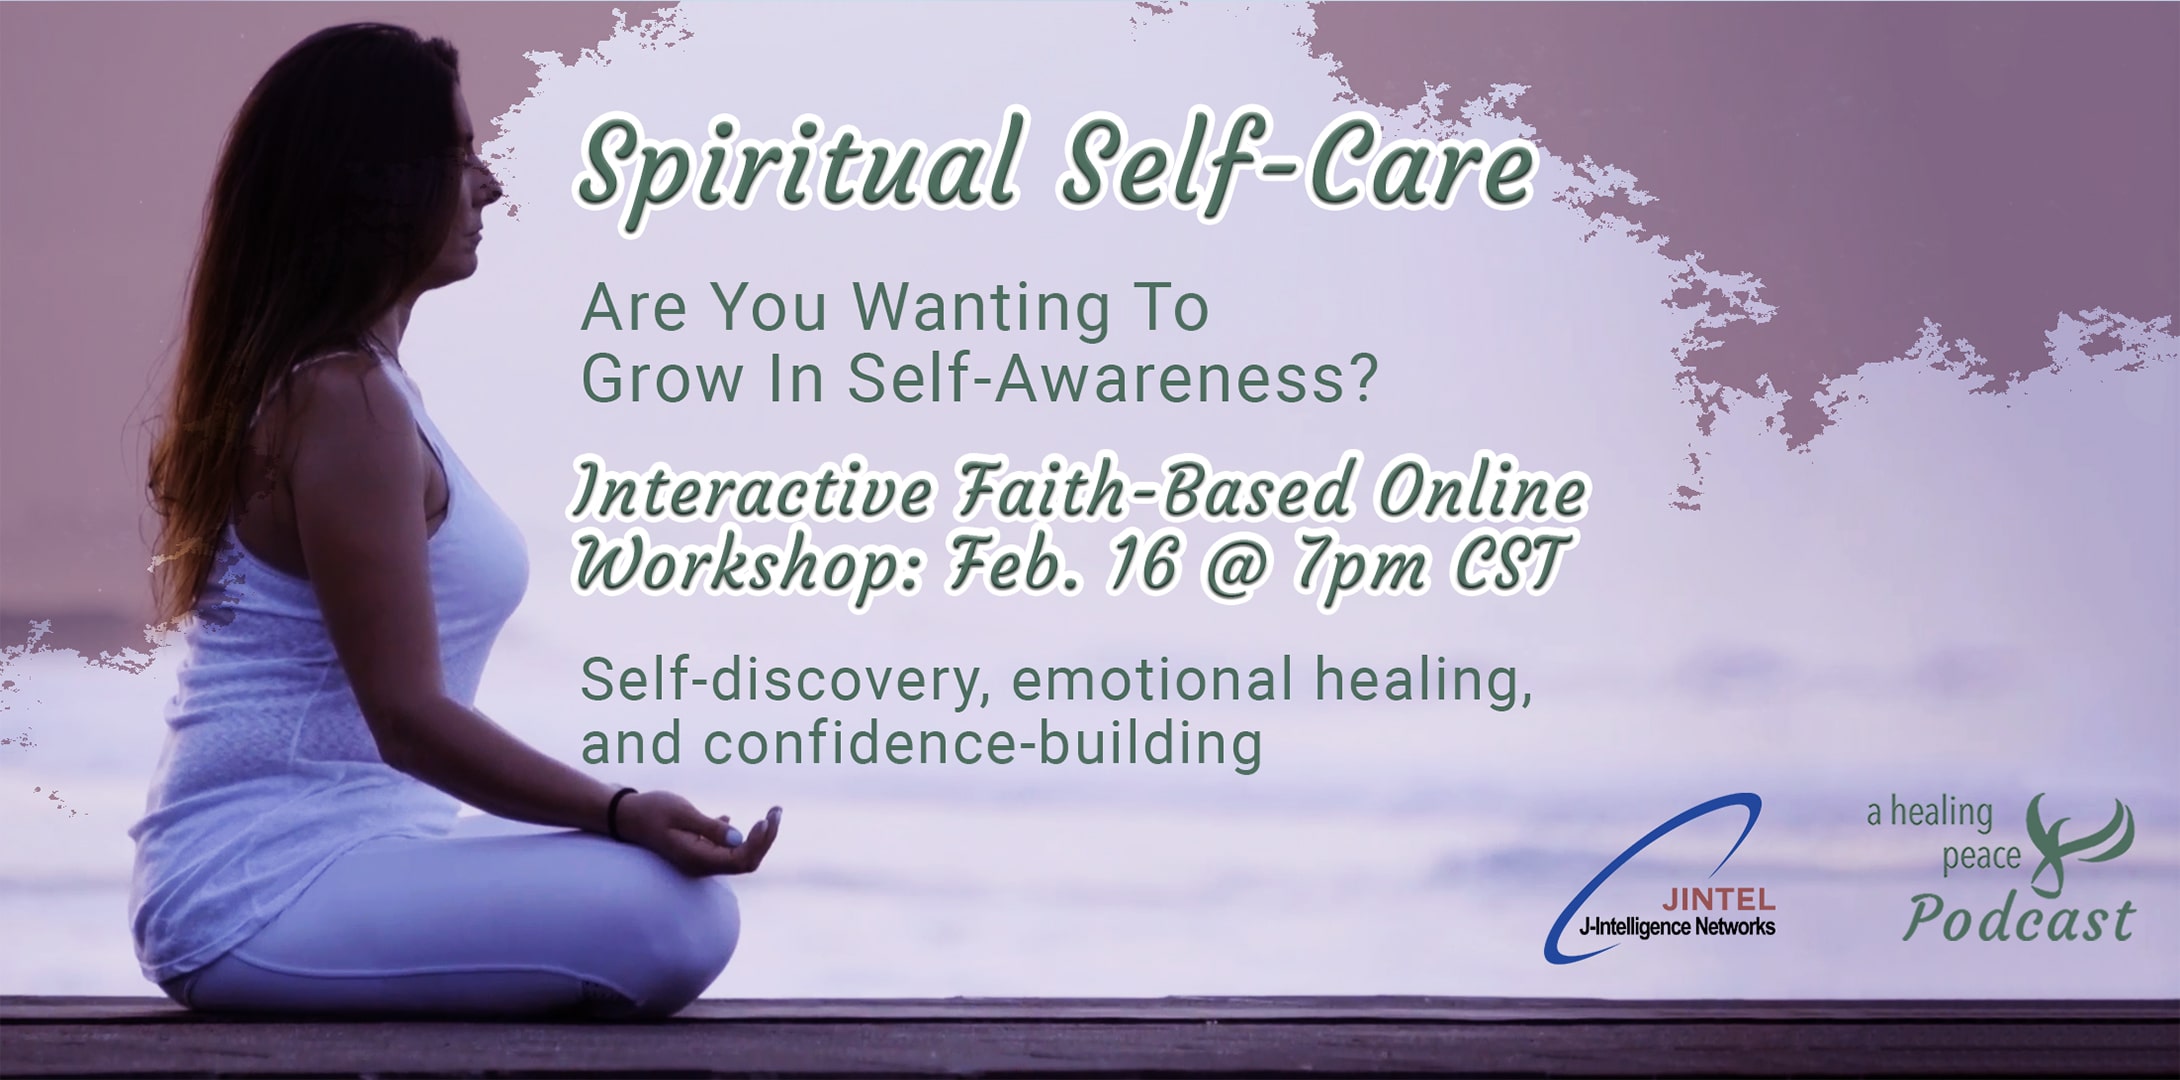 Spiritual Self-Care Workshop